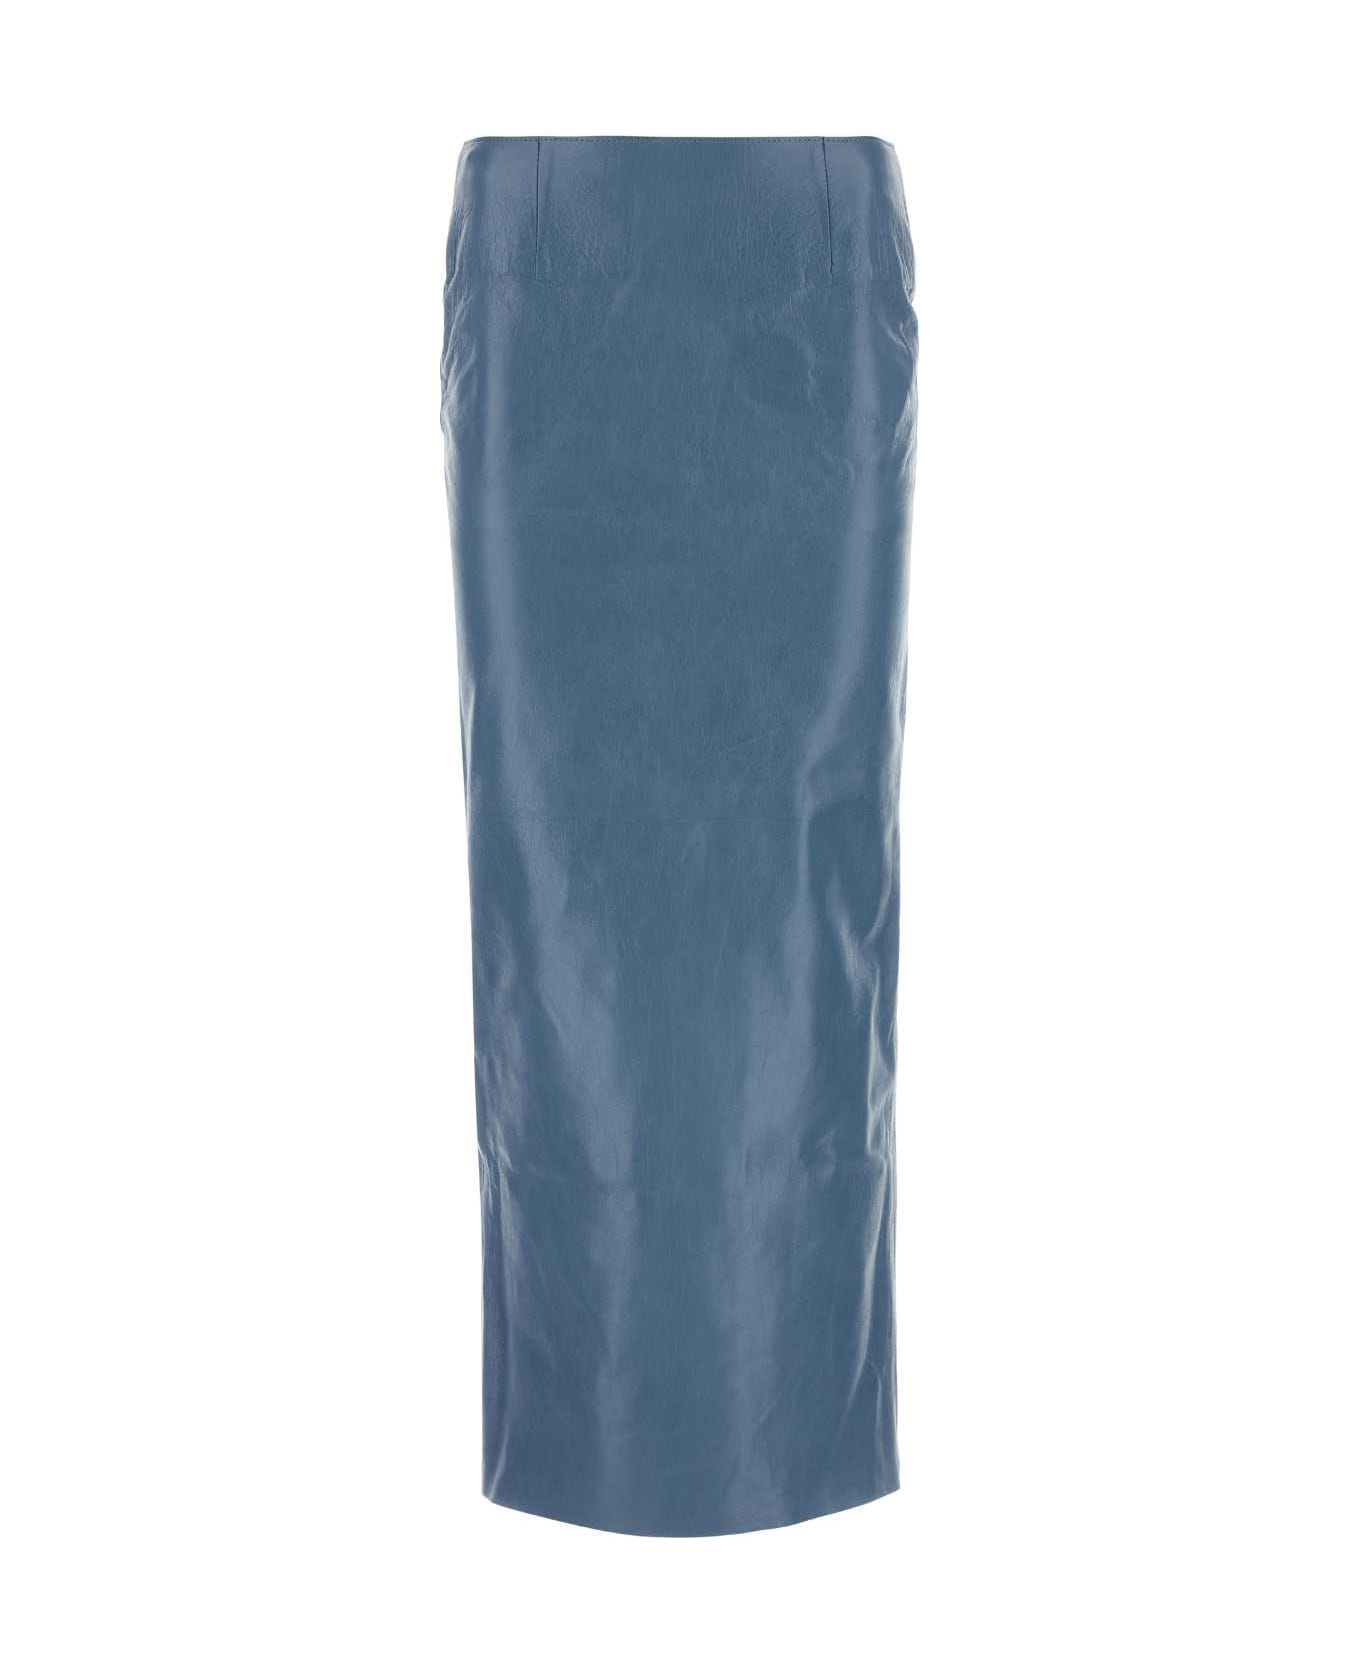 Marni Cerulean Blue Leather Skirt - 00B37